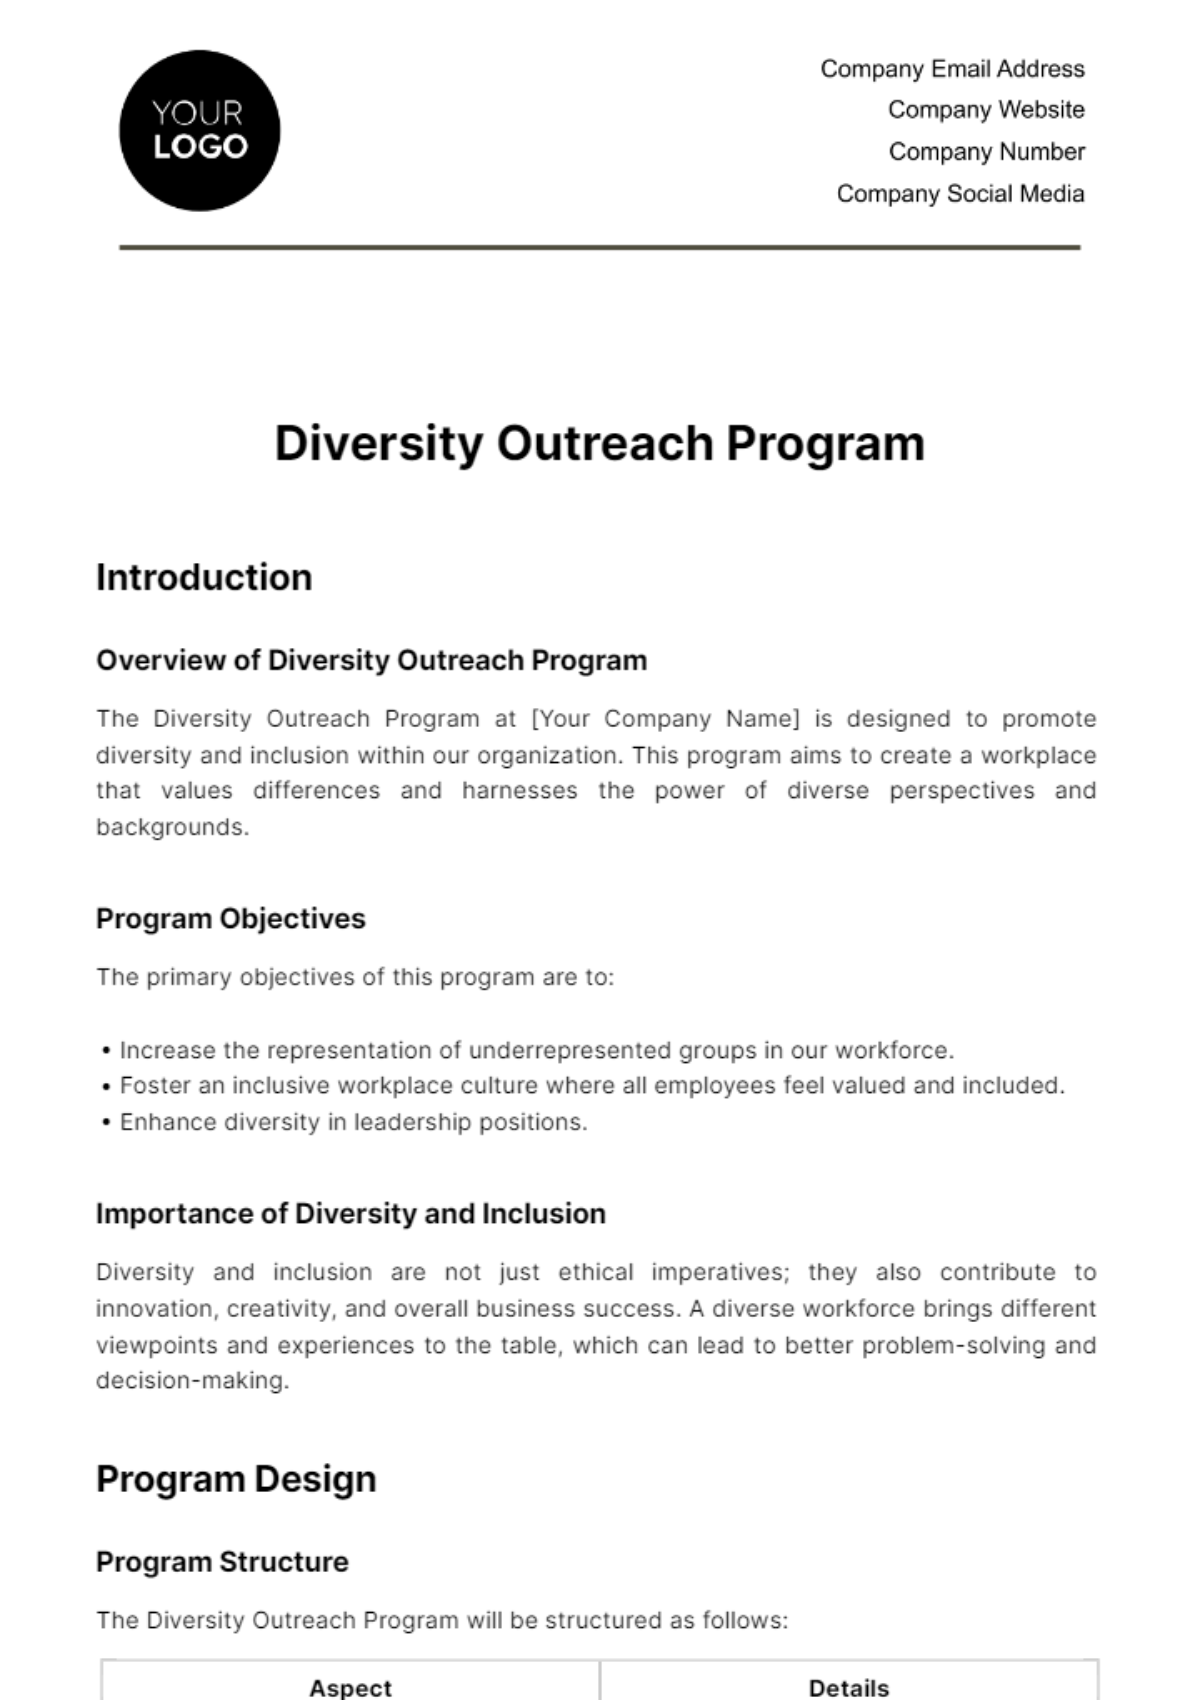 Diversity Outreach Program HR Template